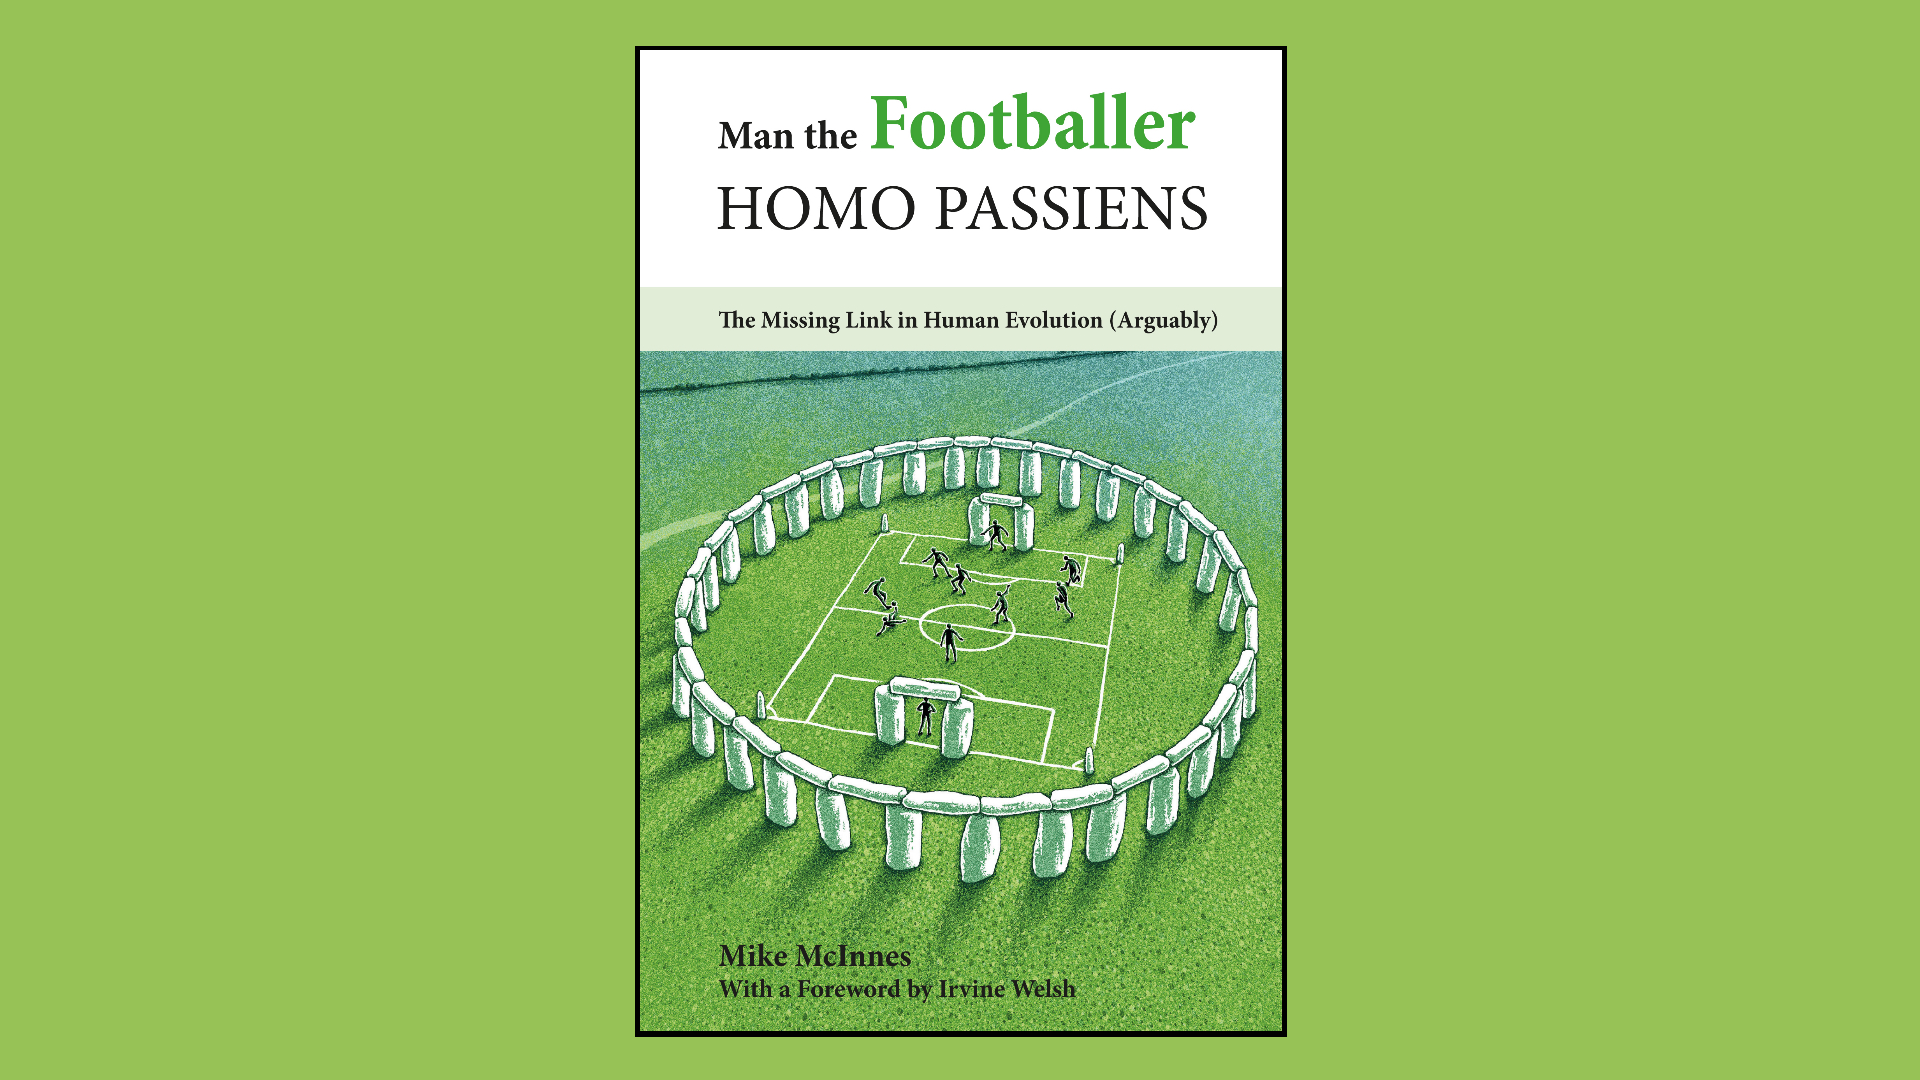 Introducing Man the Footballer: Homo Passiens